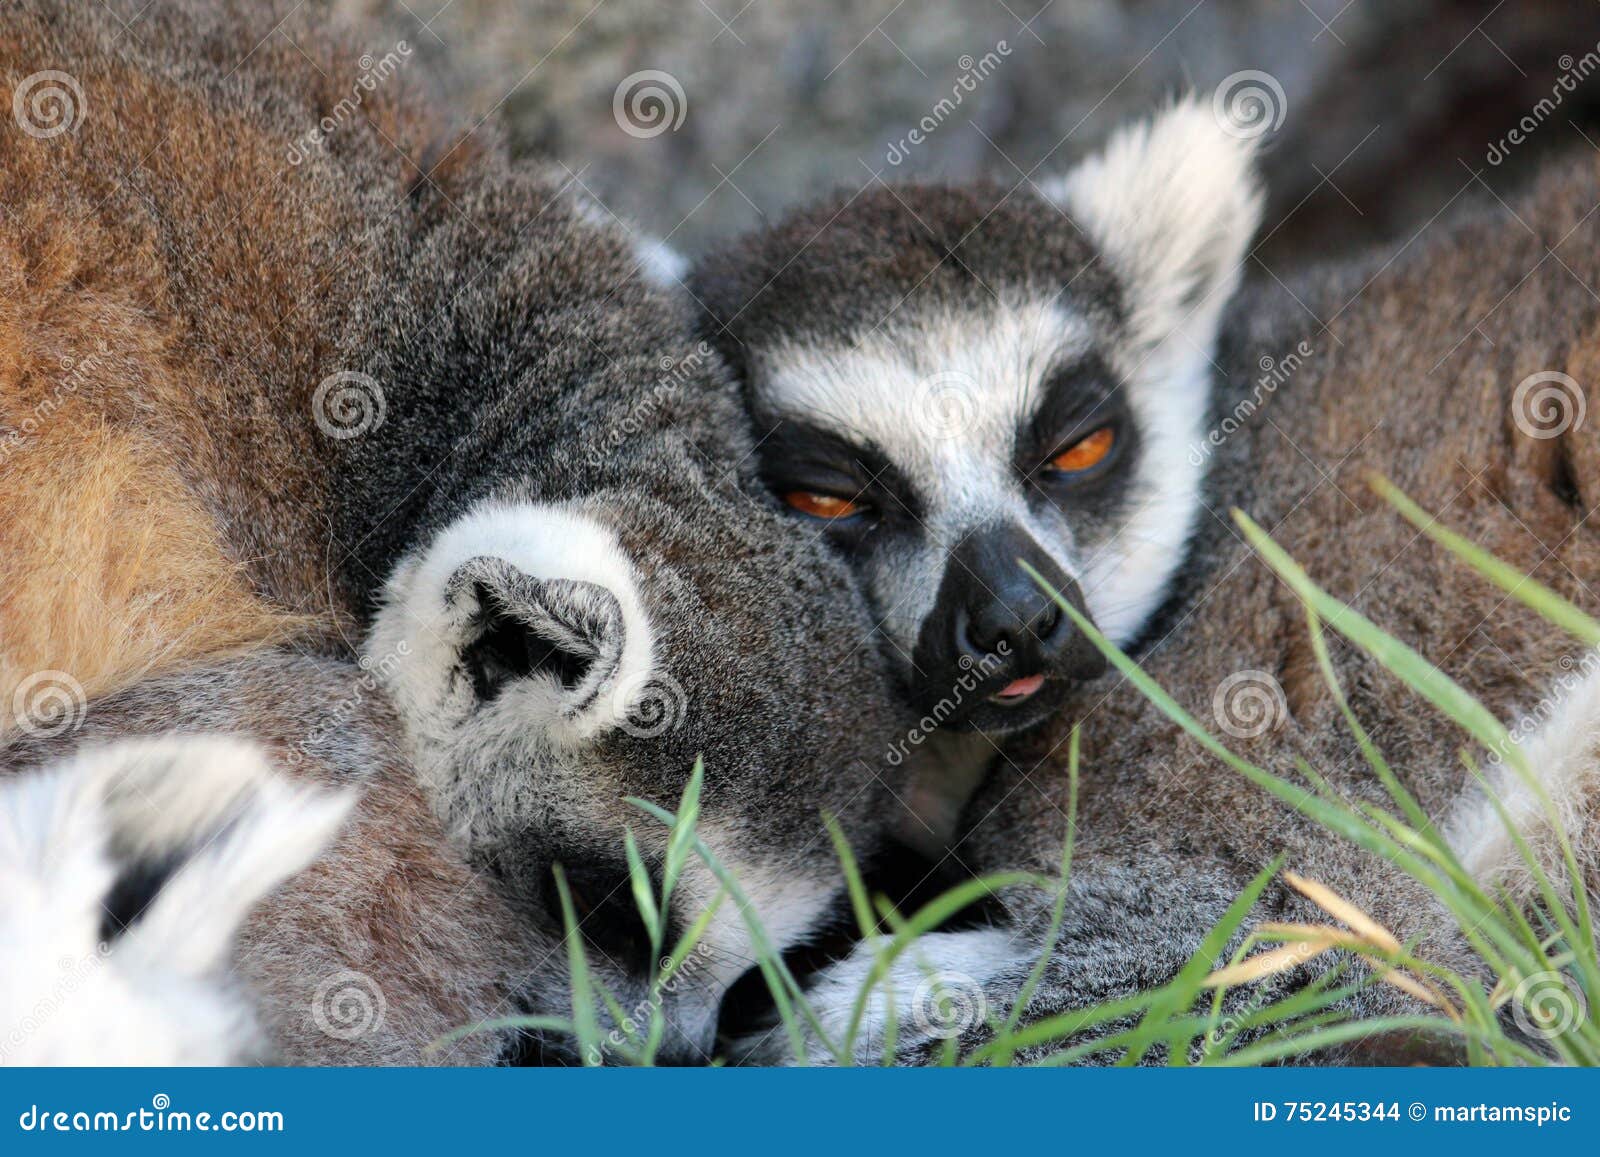 sleepy ring-tailed lemurs